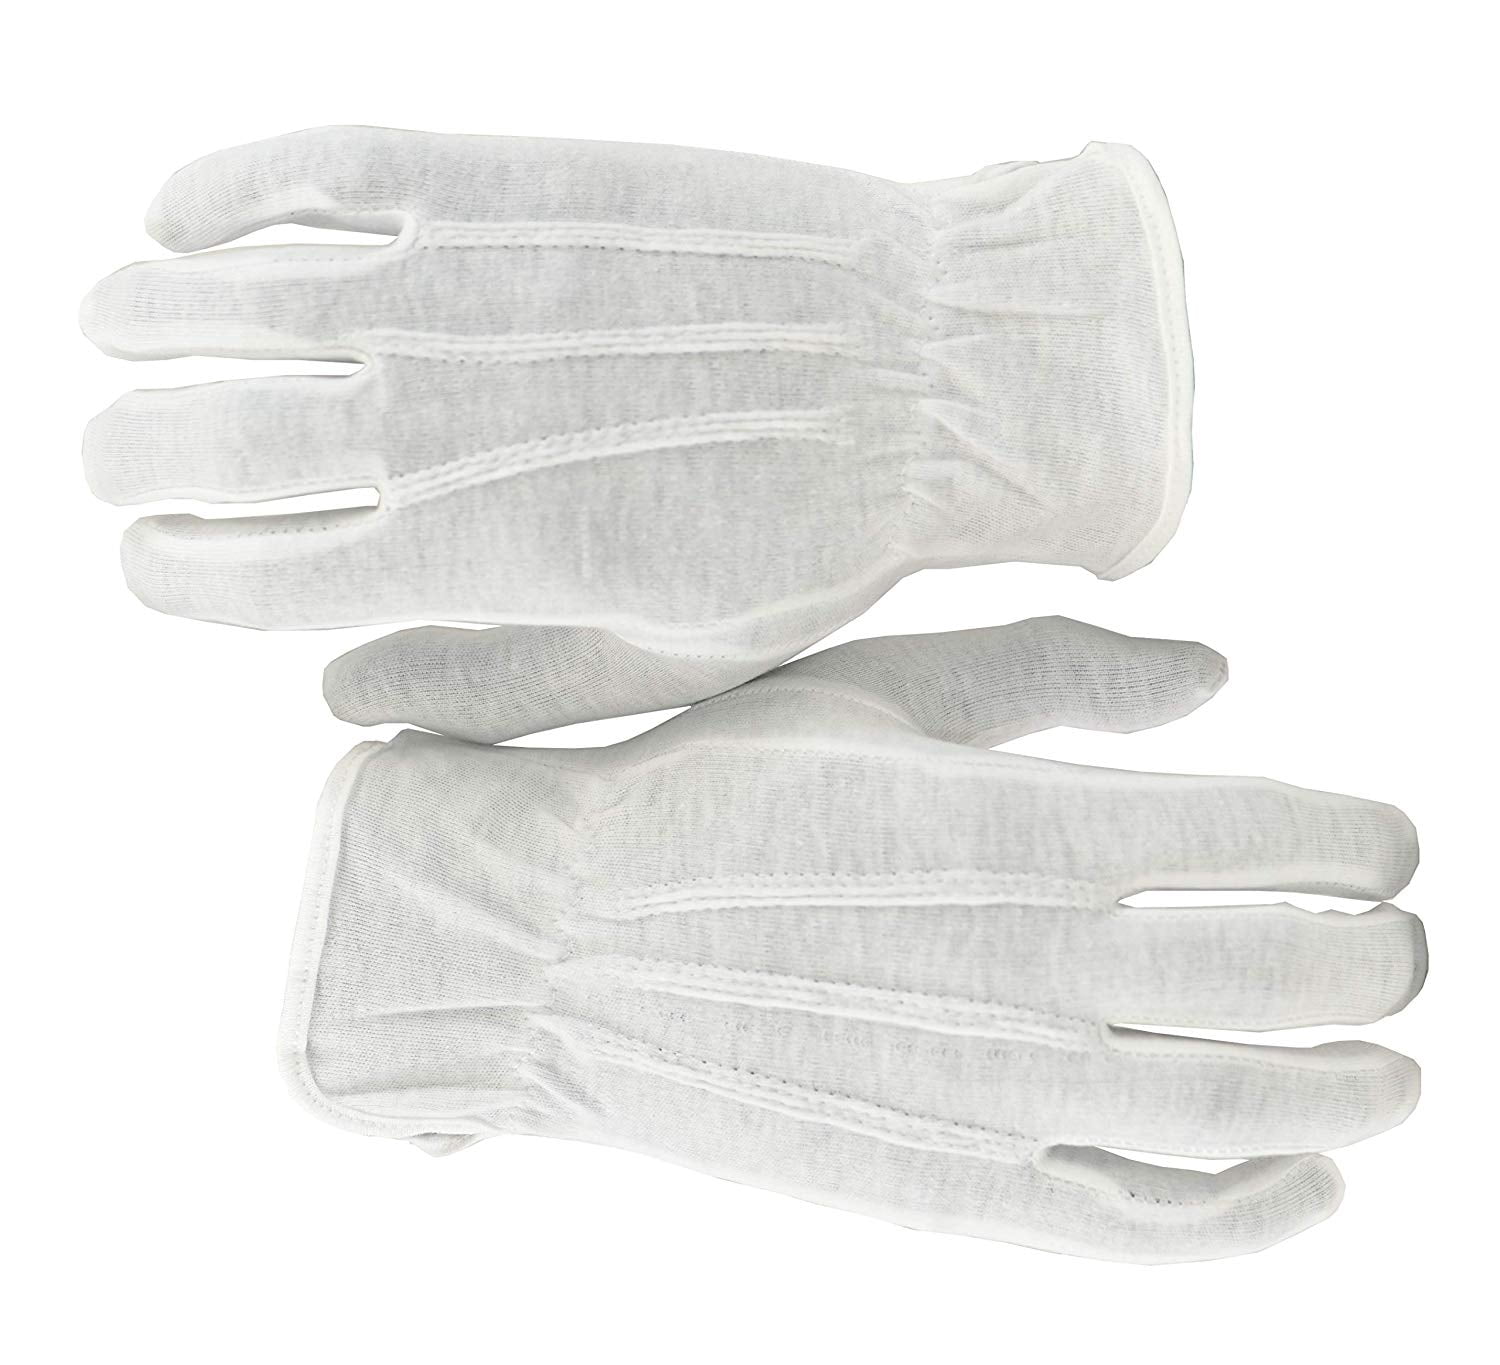 Formal Gloves White Nylon Cotton Size LG 3 Ribbed Wrist Length Costume Waiter 